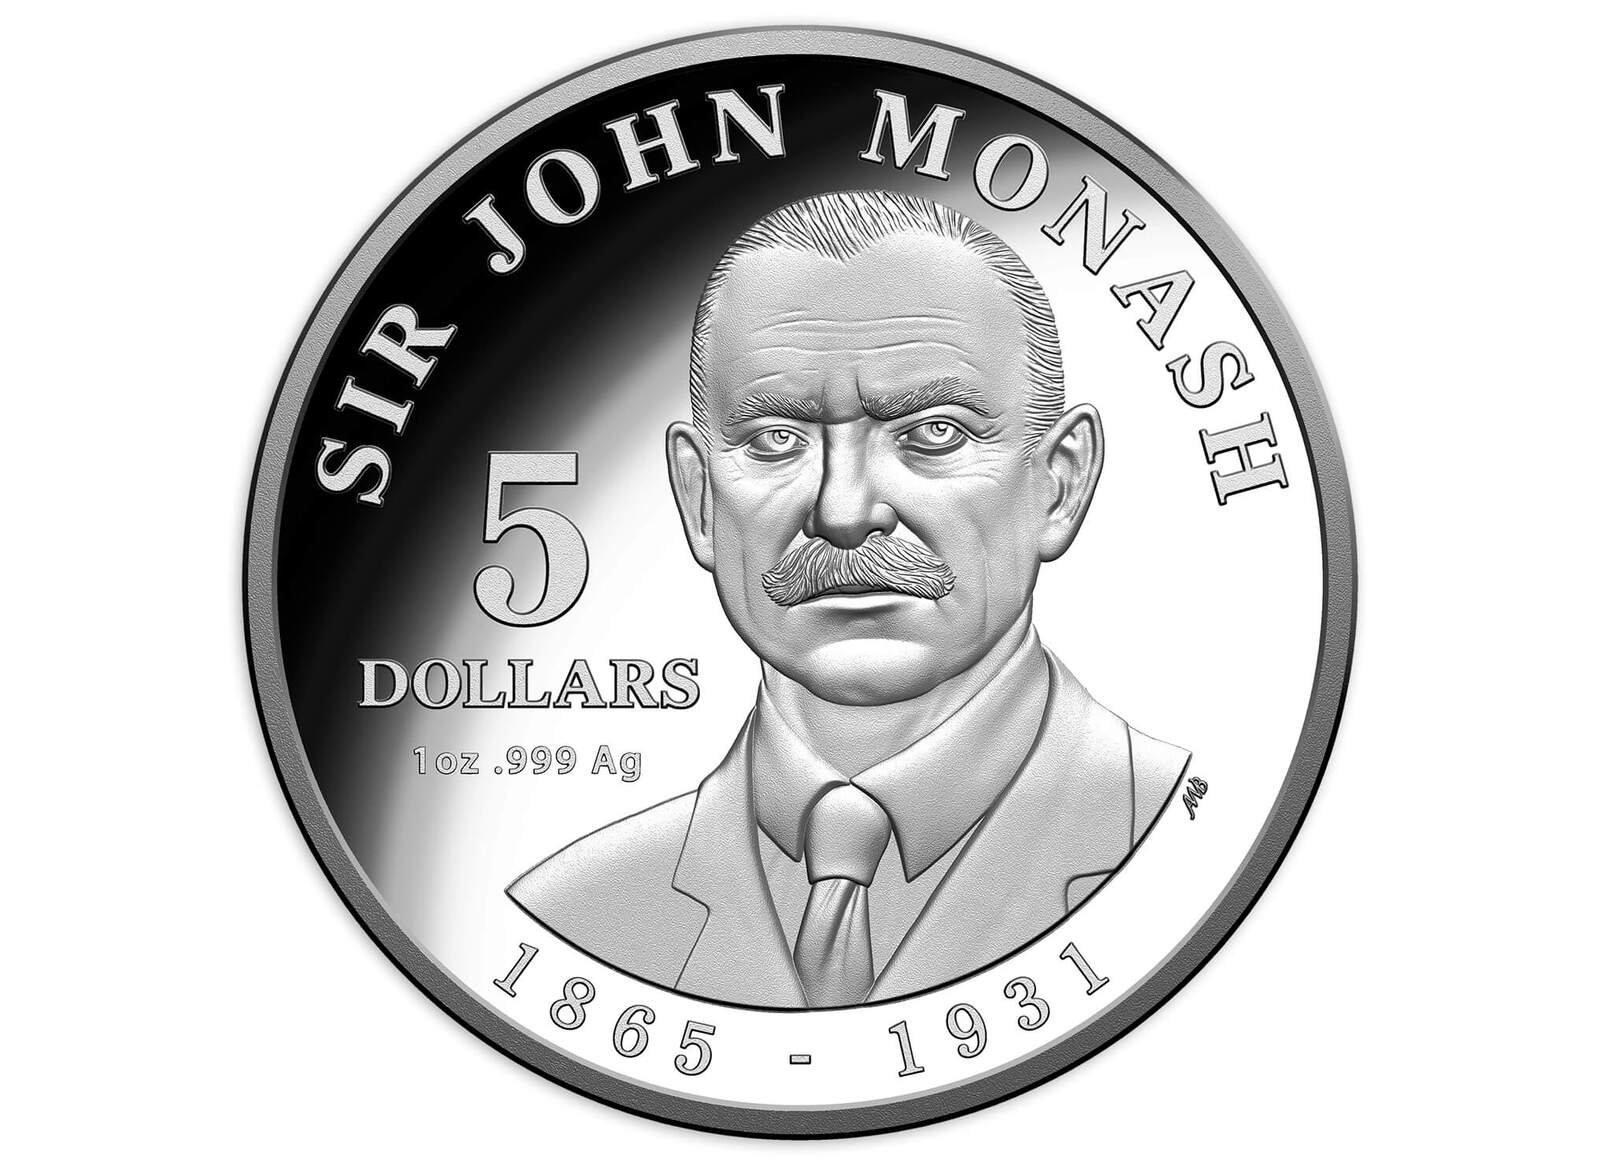 2018 $1 Sir John Monash Silver Proof Coin